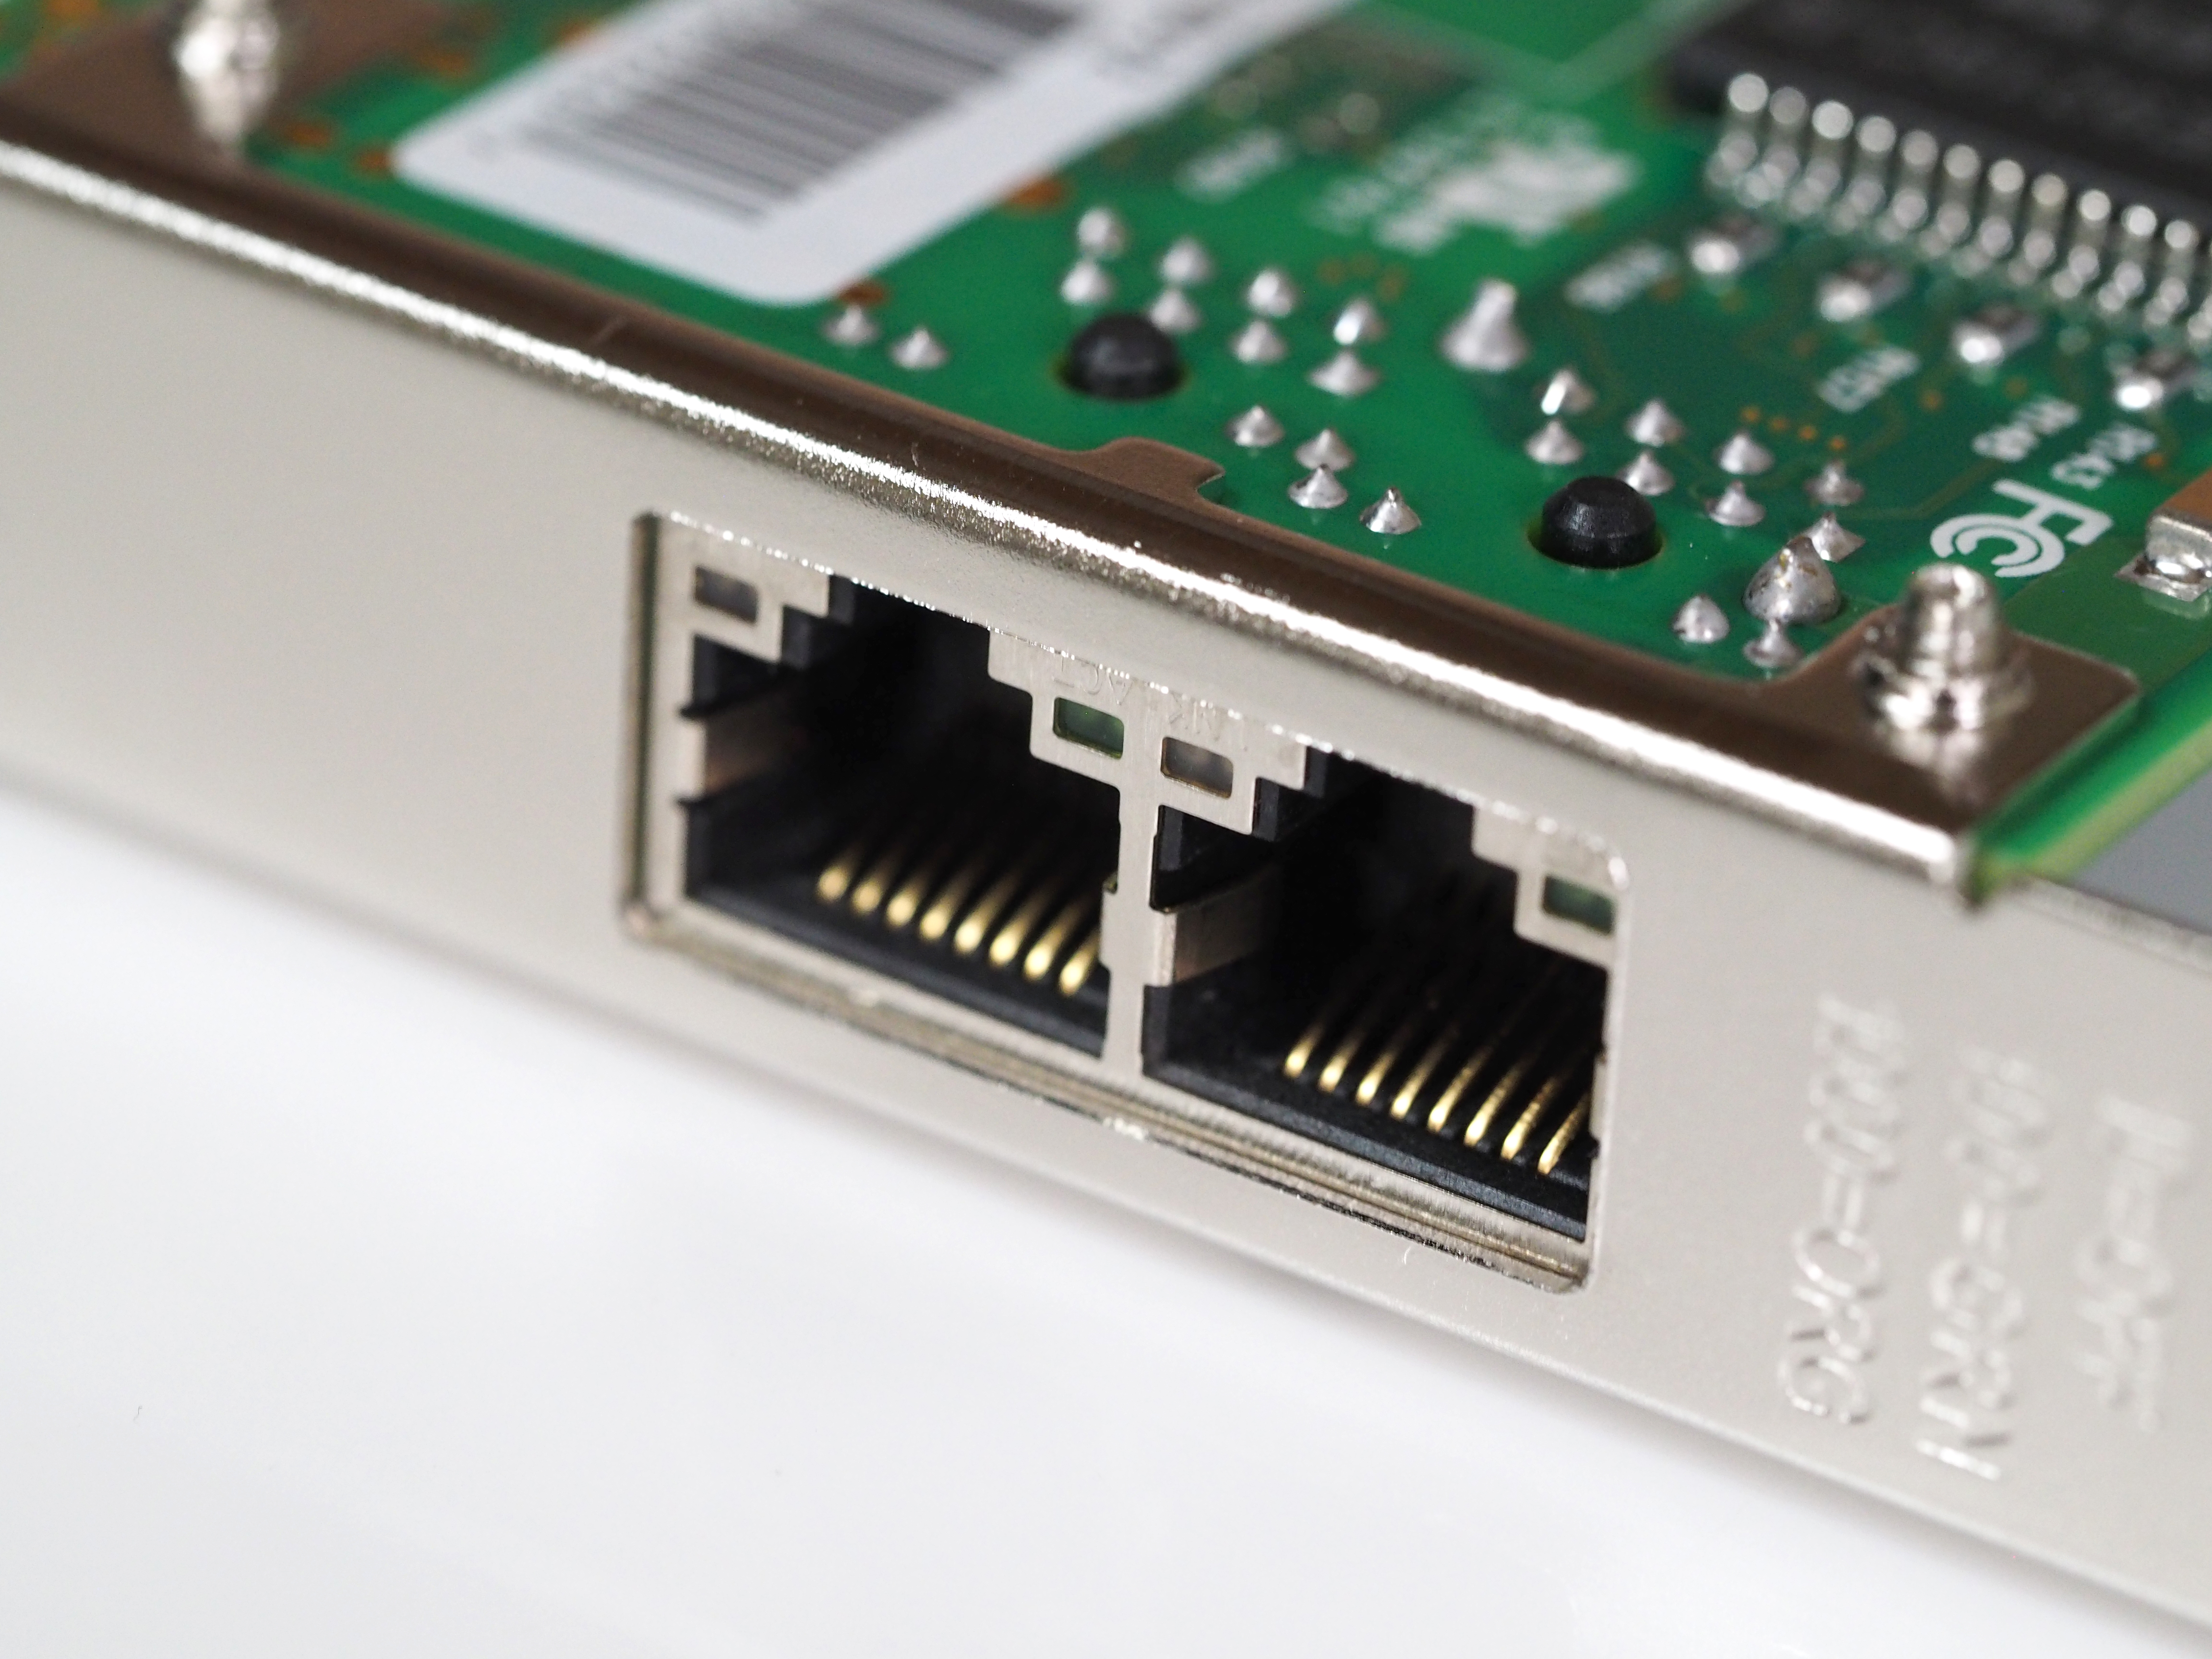 Intel Ethernet Server Adapter I350-T2V2 のレビュー | iPentec